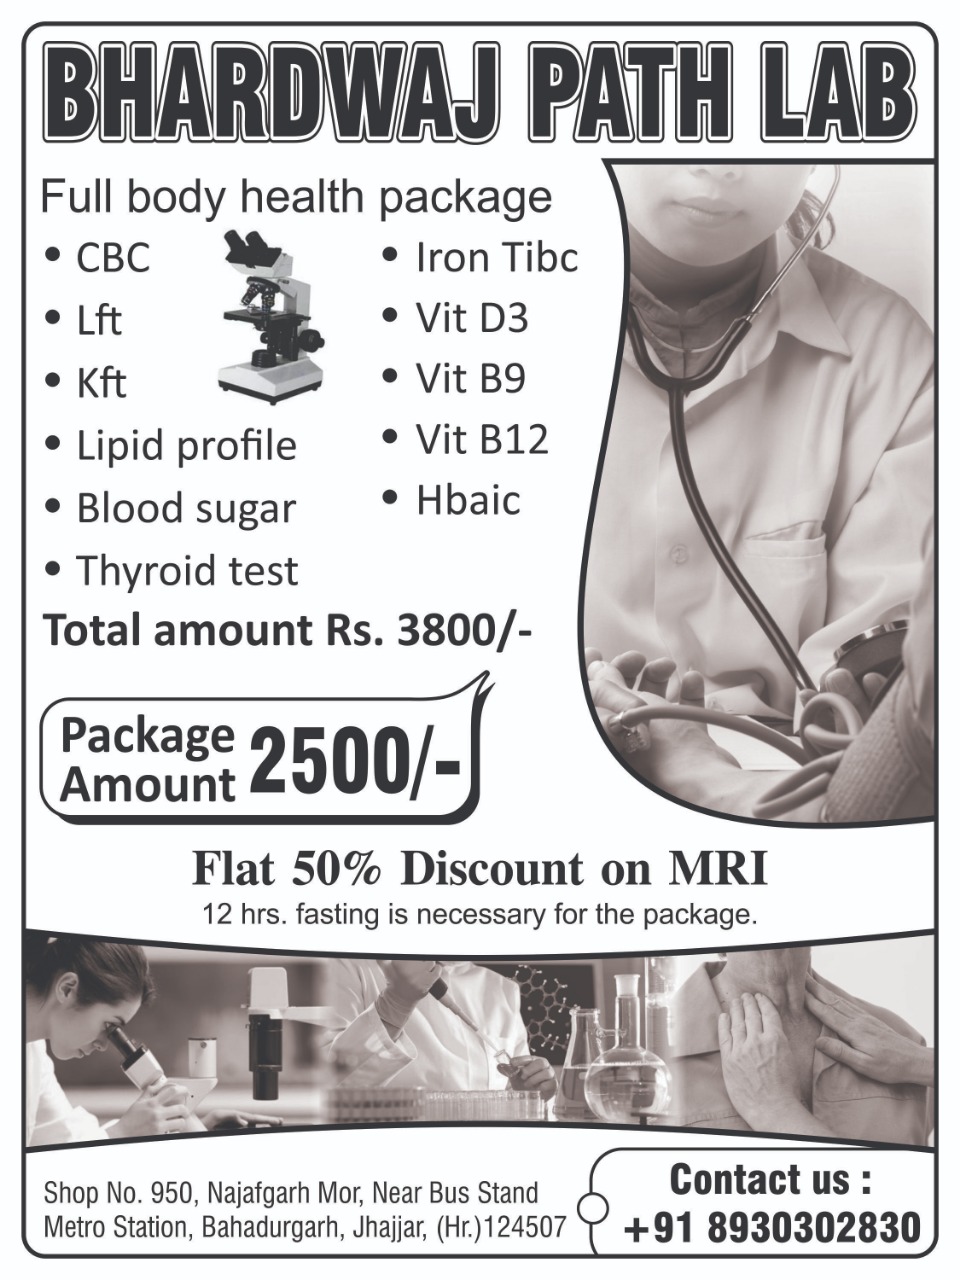 Bhardwaj path lab|Hospitals|Medical Services